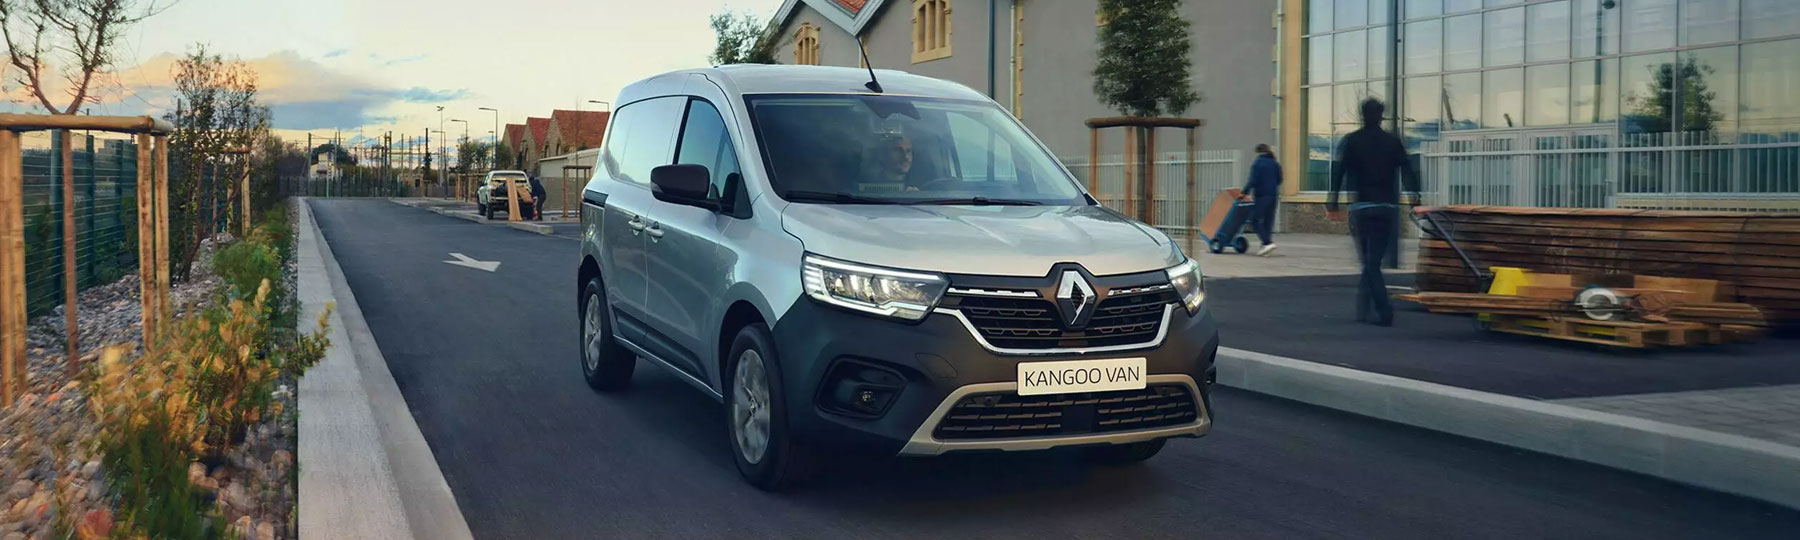 Renault Kangoo Business Offer